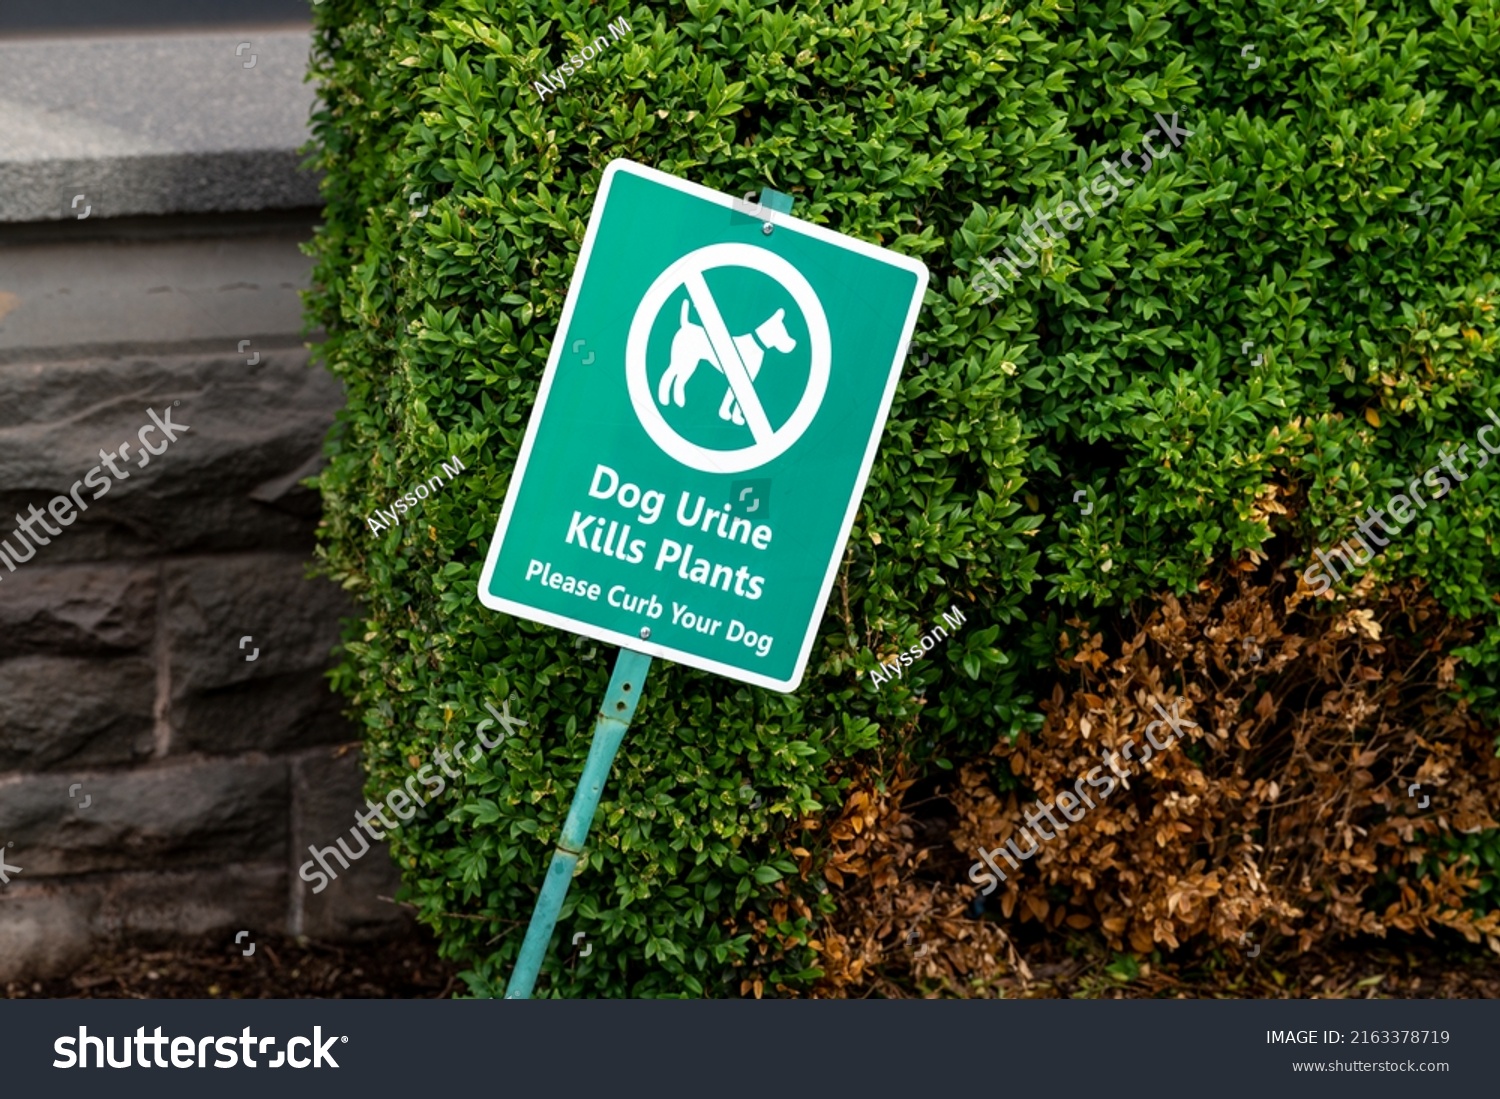 Dog Urine Kills Plants Please Curb Stock Photo 2163378719 | Shutterstock